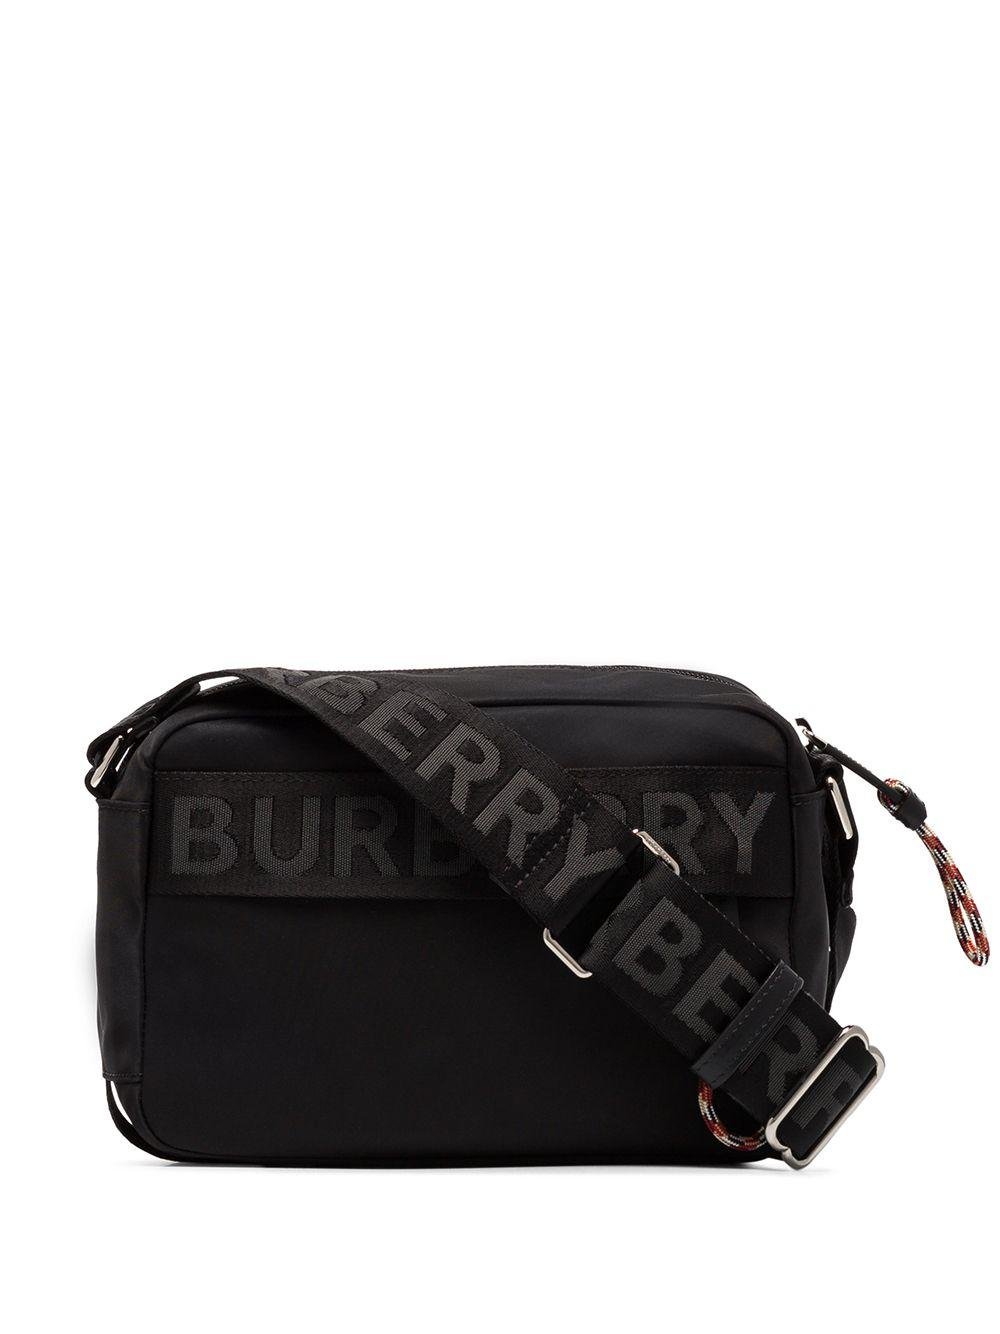 Burberry Check Fabric Crossbody Bag in Black for Men